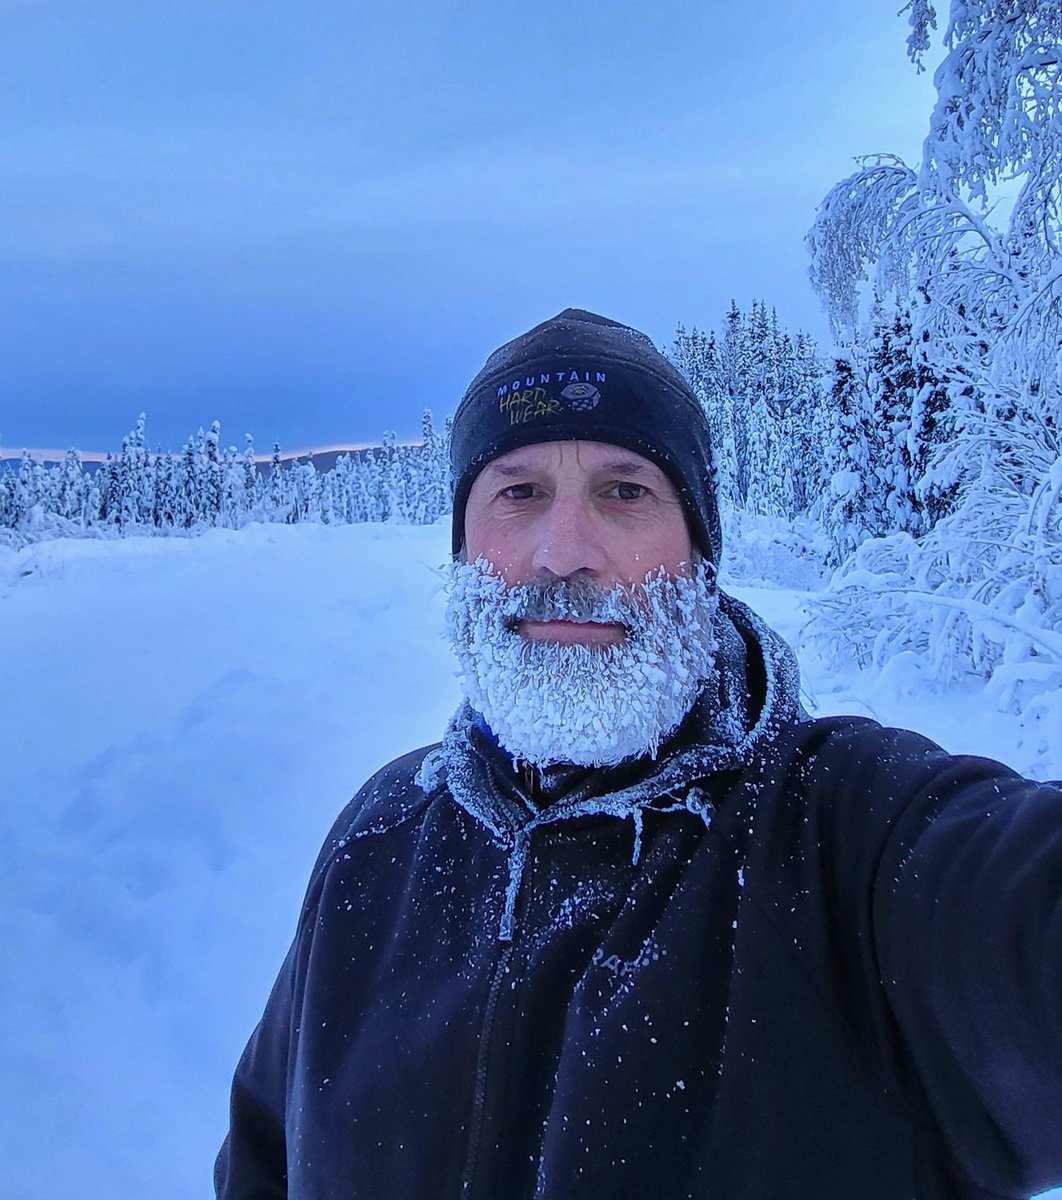 Happy Winter Solstice Eve everyone!
#Alaskatwitter